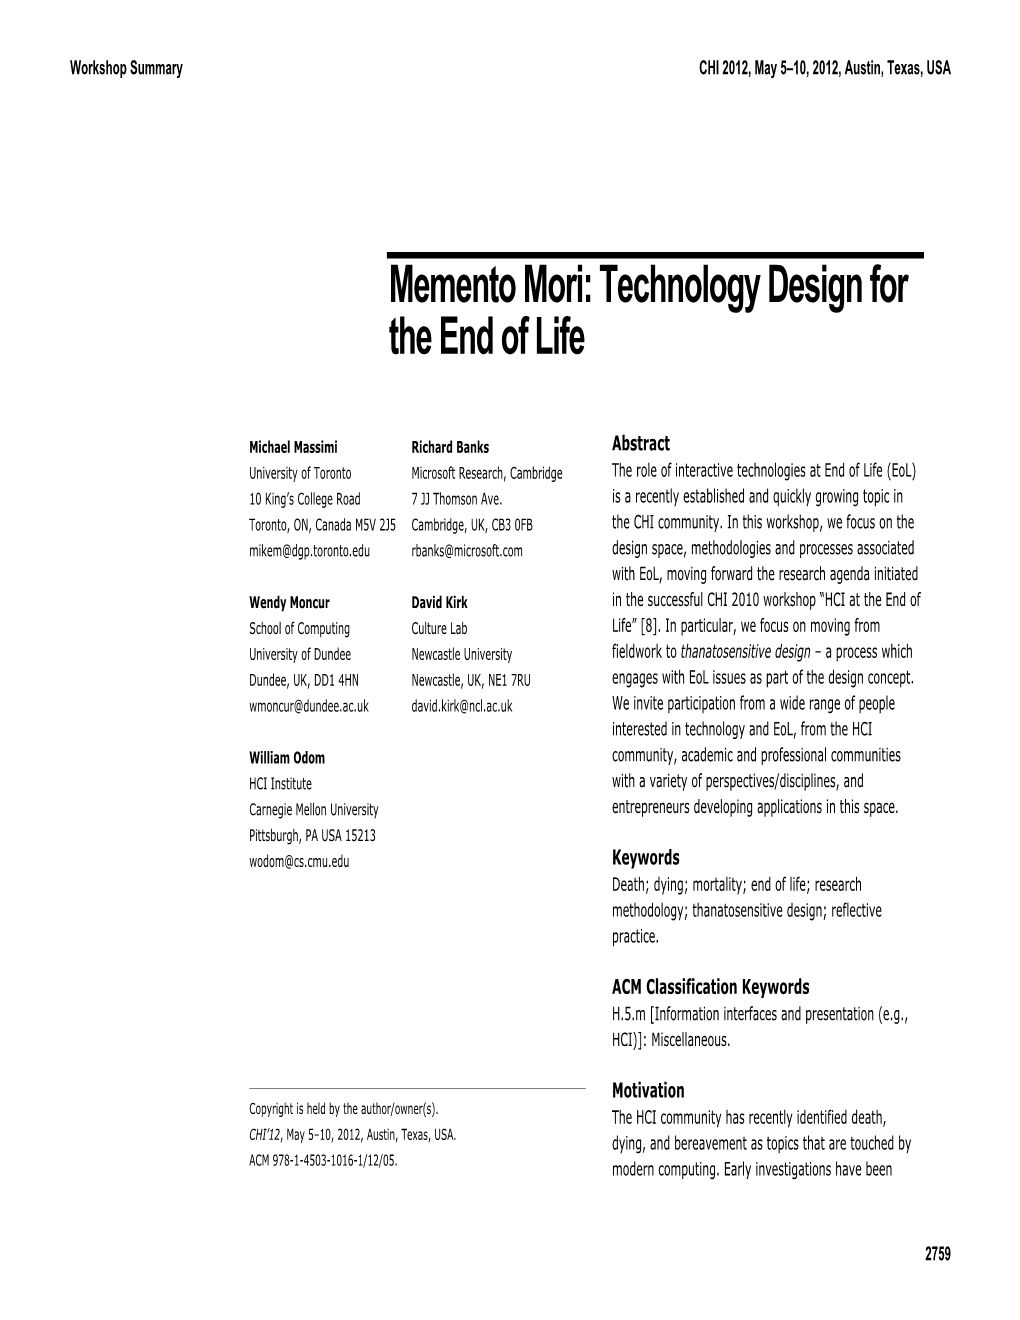 Memento Mori: Technology Design for the End of Life